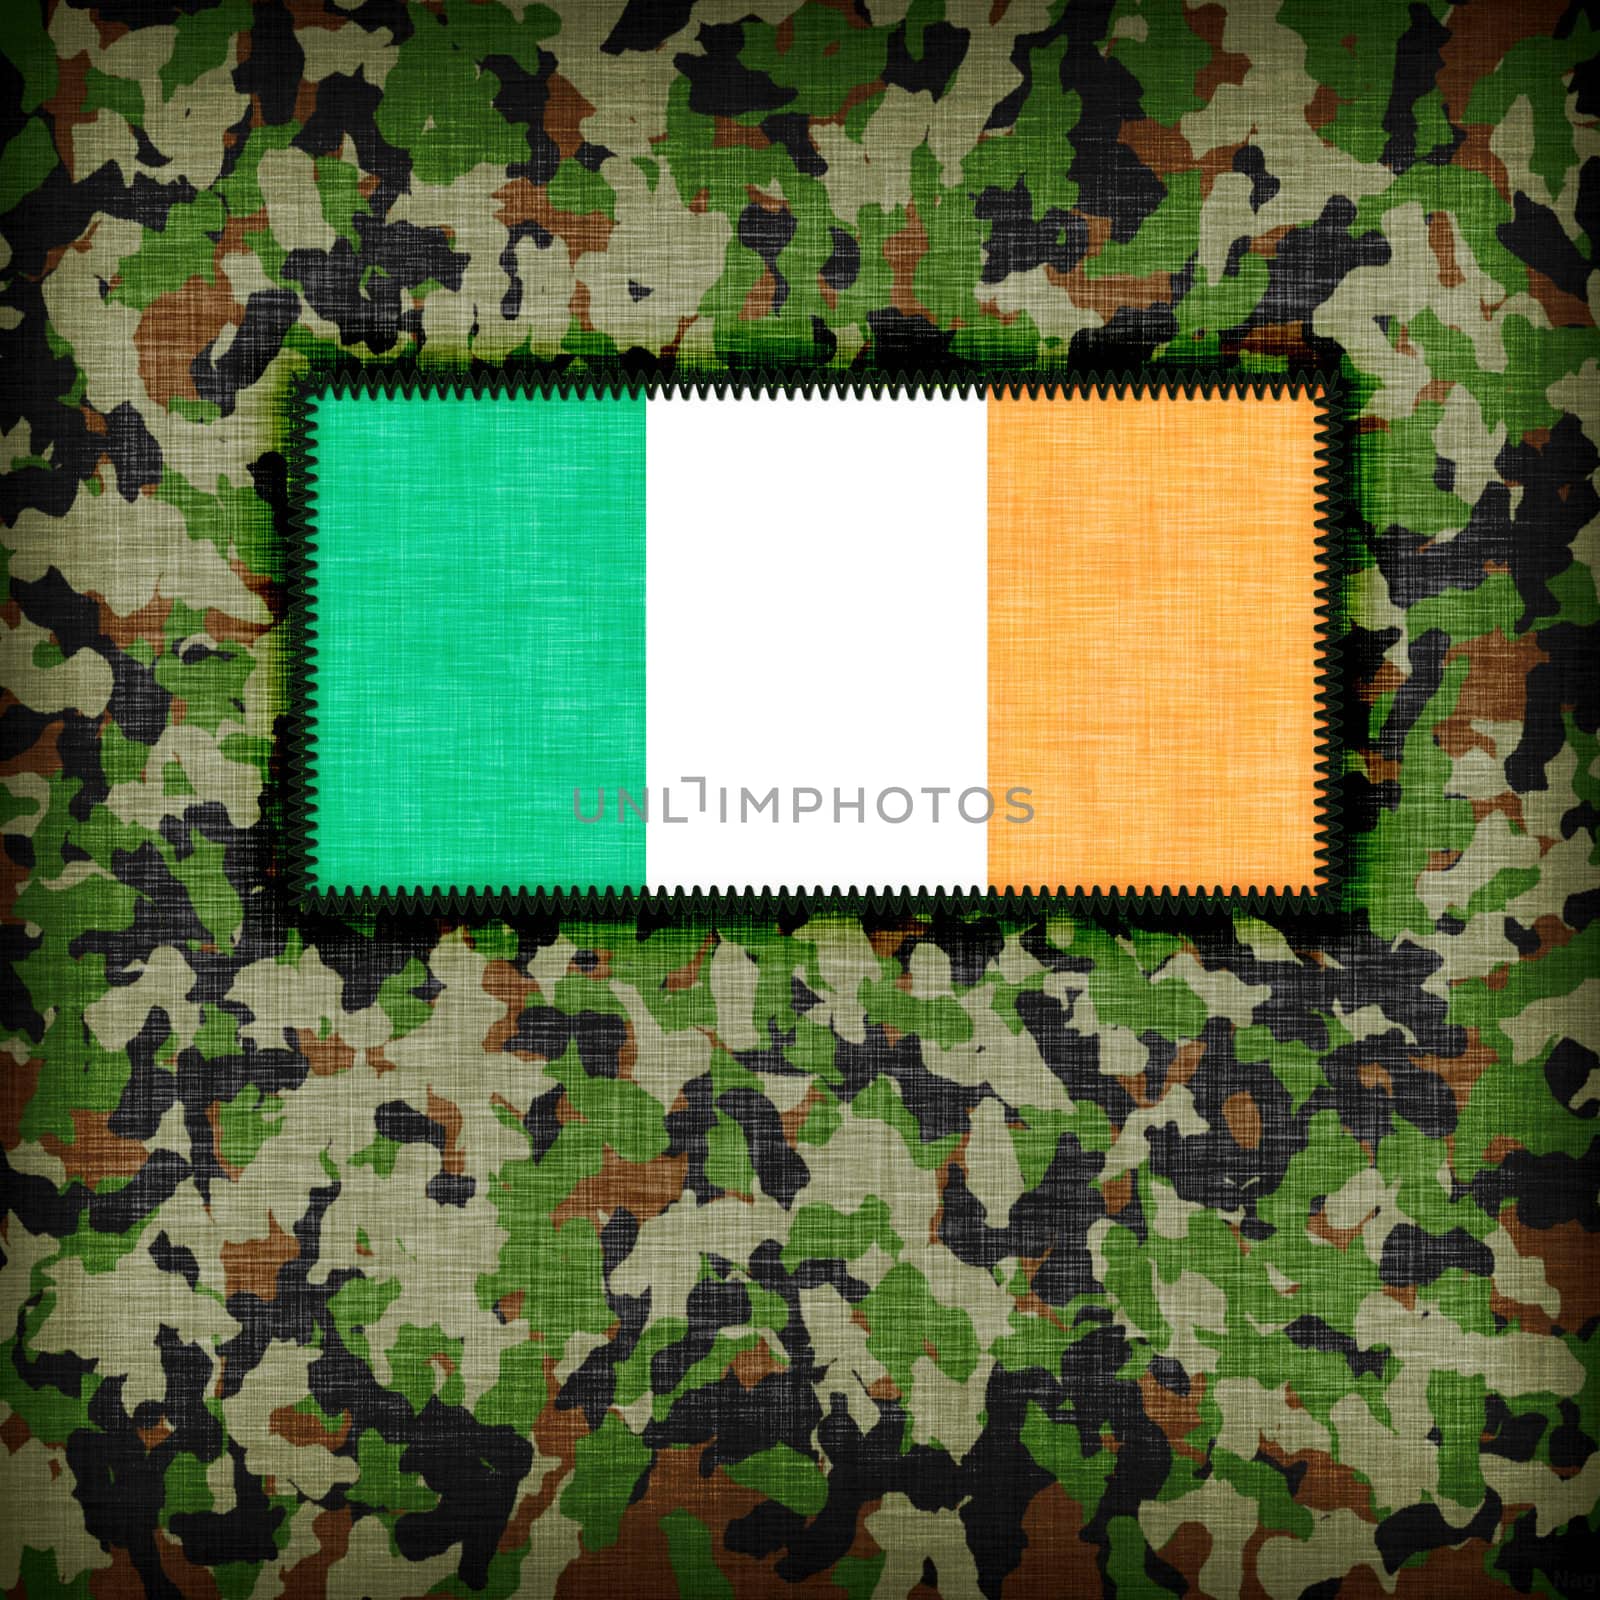 Amy camouflage uniform, Ireland by michaklootwijk